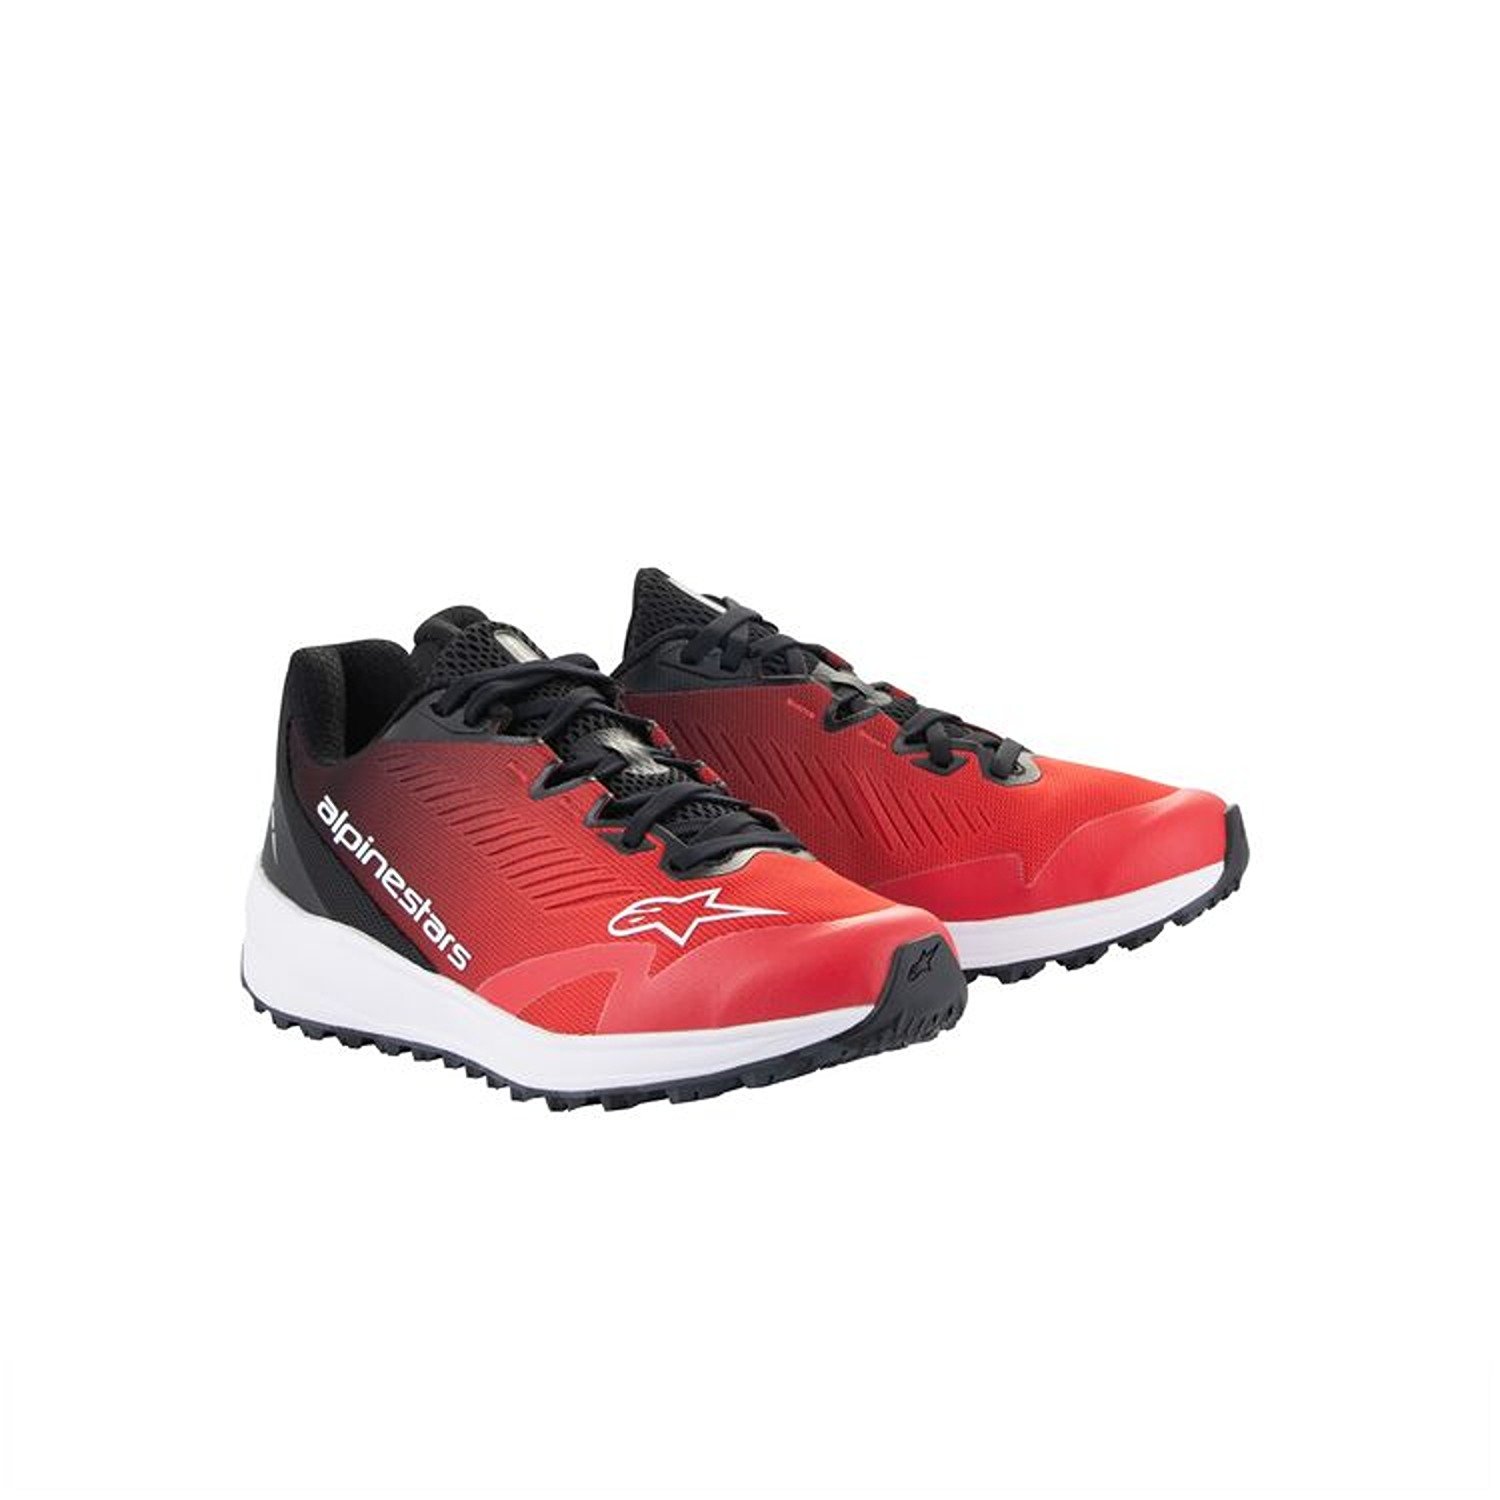 Image of Alpinestars Meta Road V2 Shoes Red Black White Size US 8 ID 8059347381442